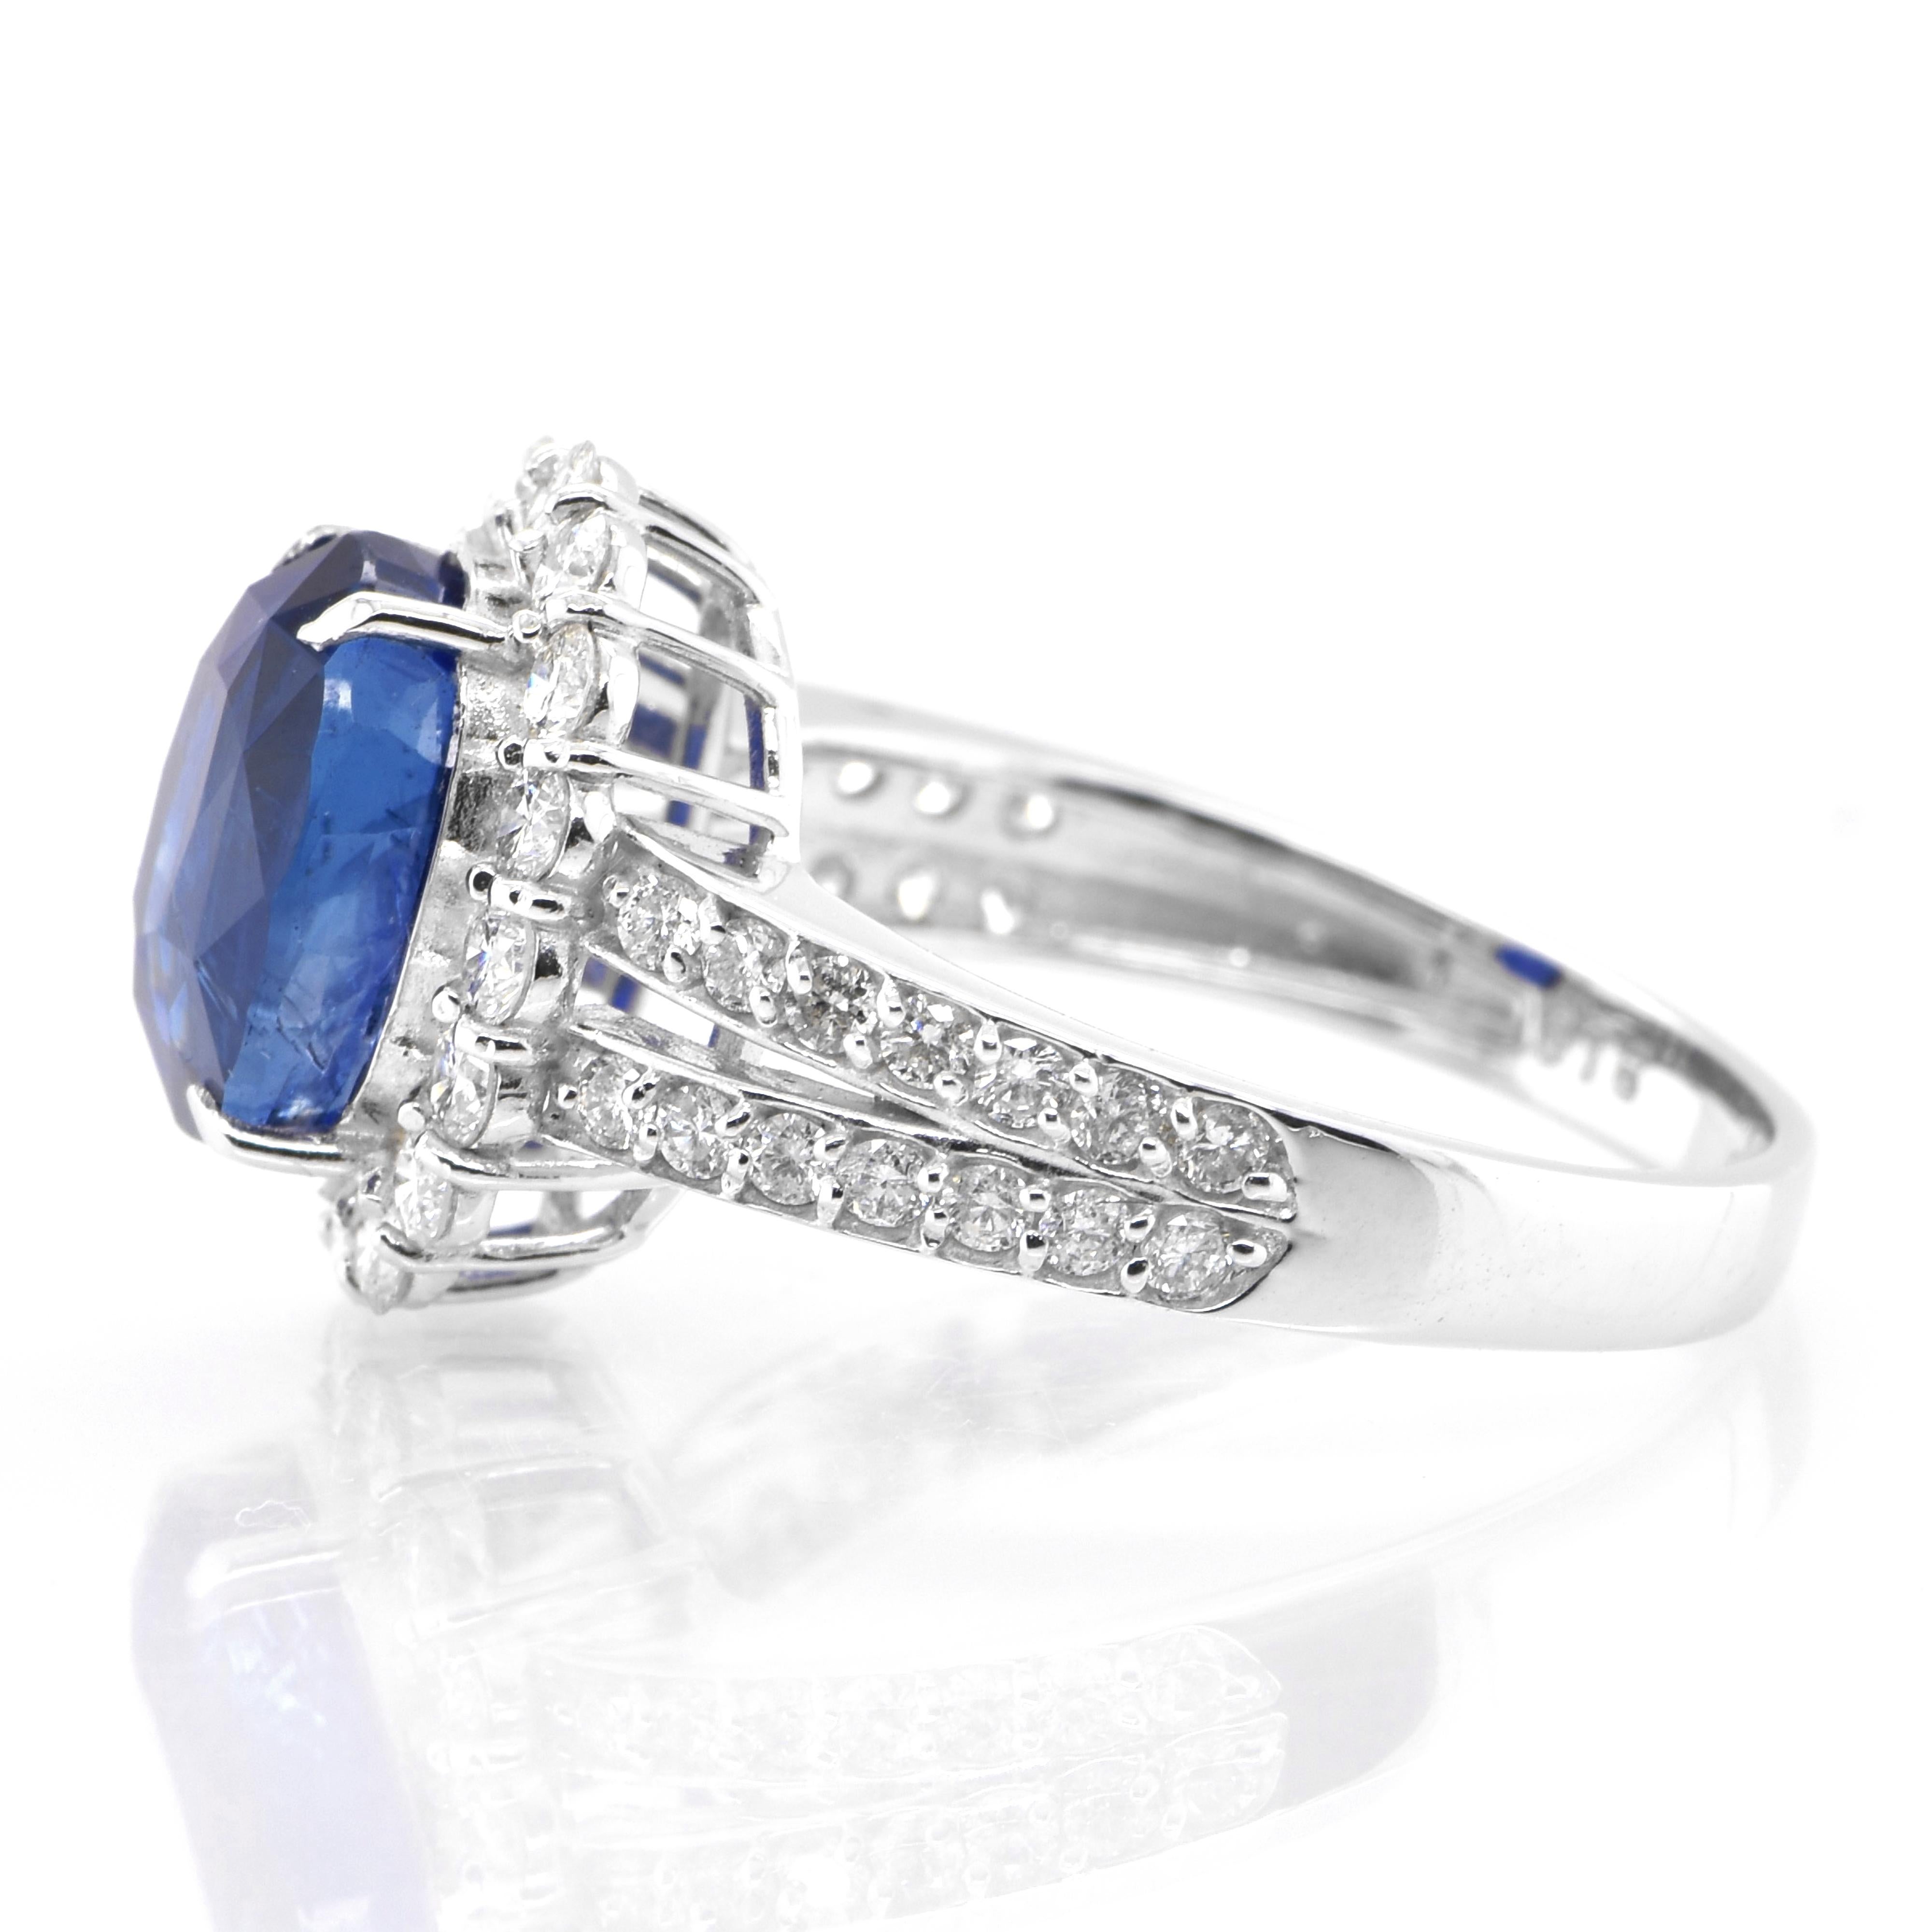 Modern 3.85 Carat Natural Sapphire and Diamond Halo Ring Set in Platinum